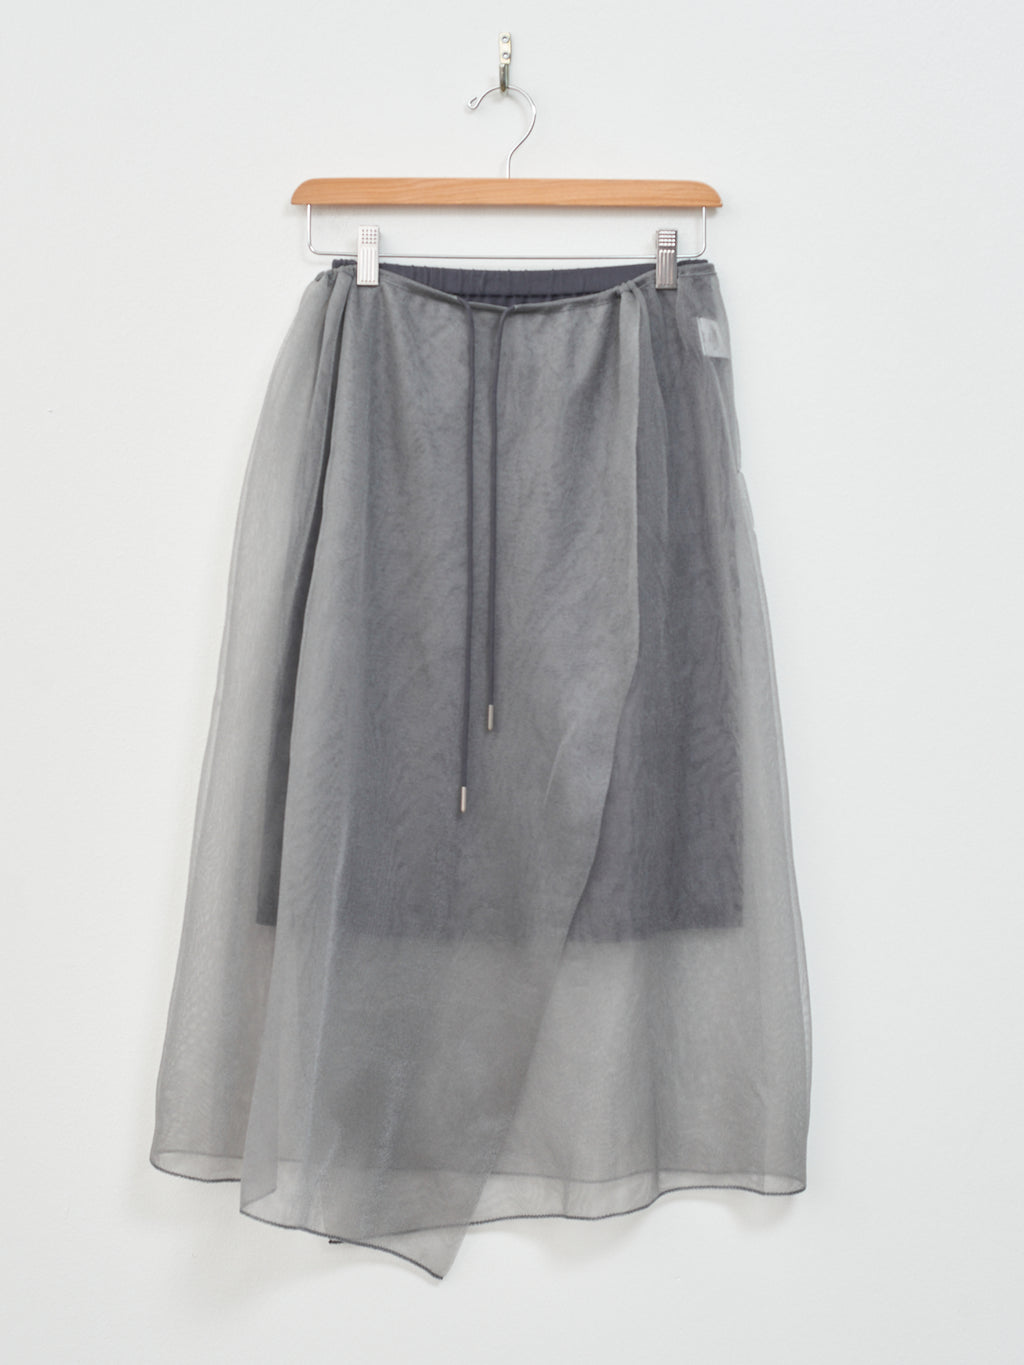 Namu Shop - Unfil Yarn Knit Skirt - Gray